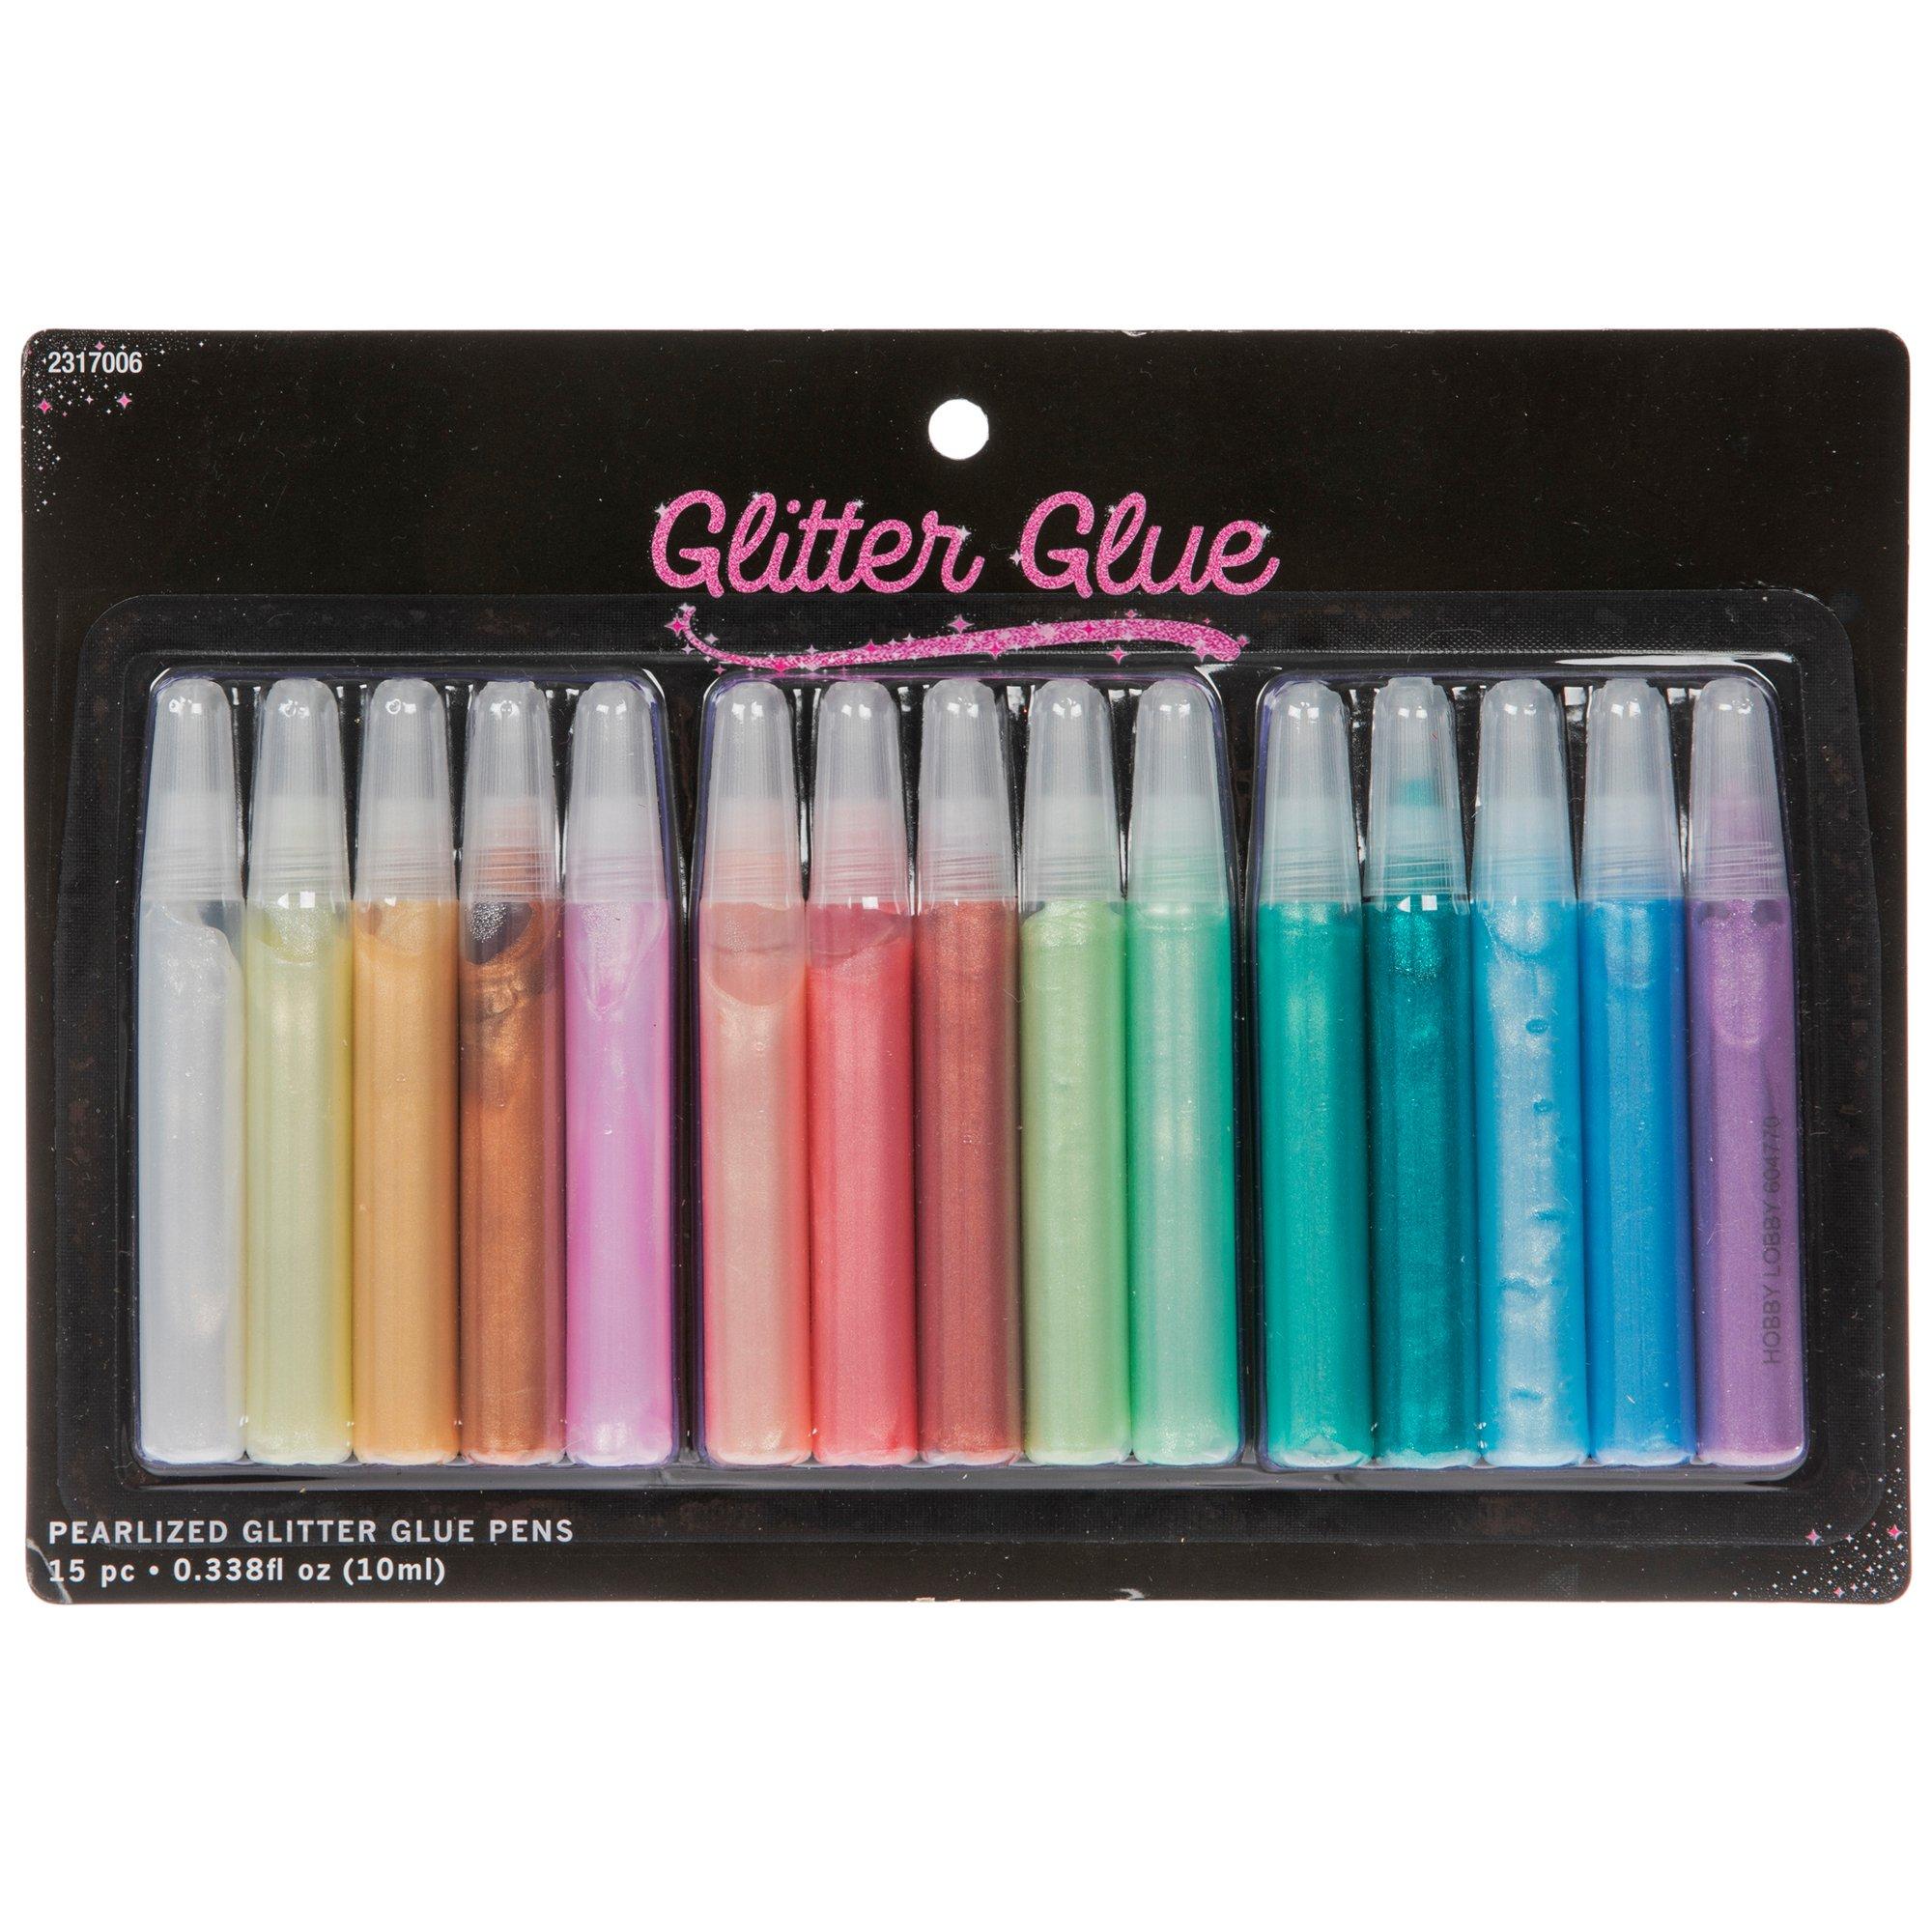 Washable Glitter Glue, Hobby Lobby